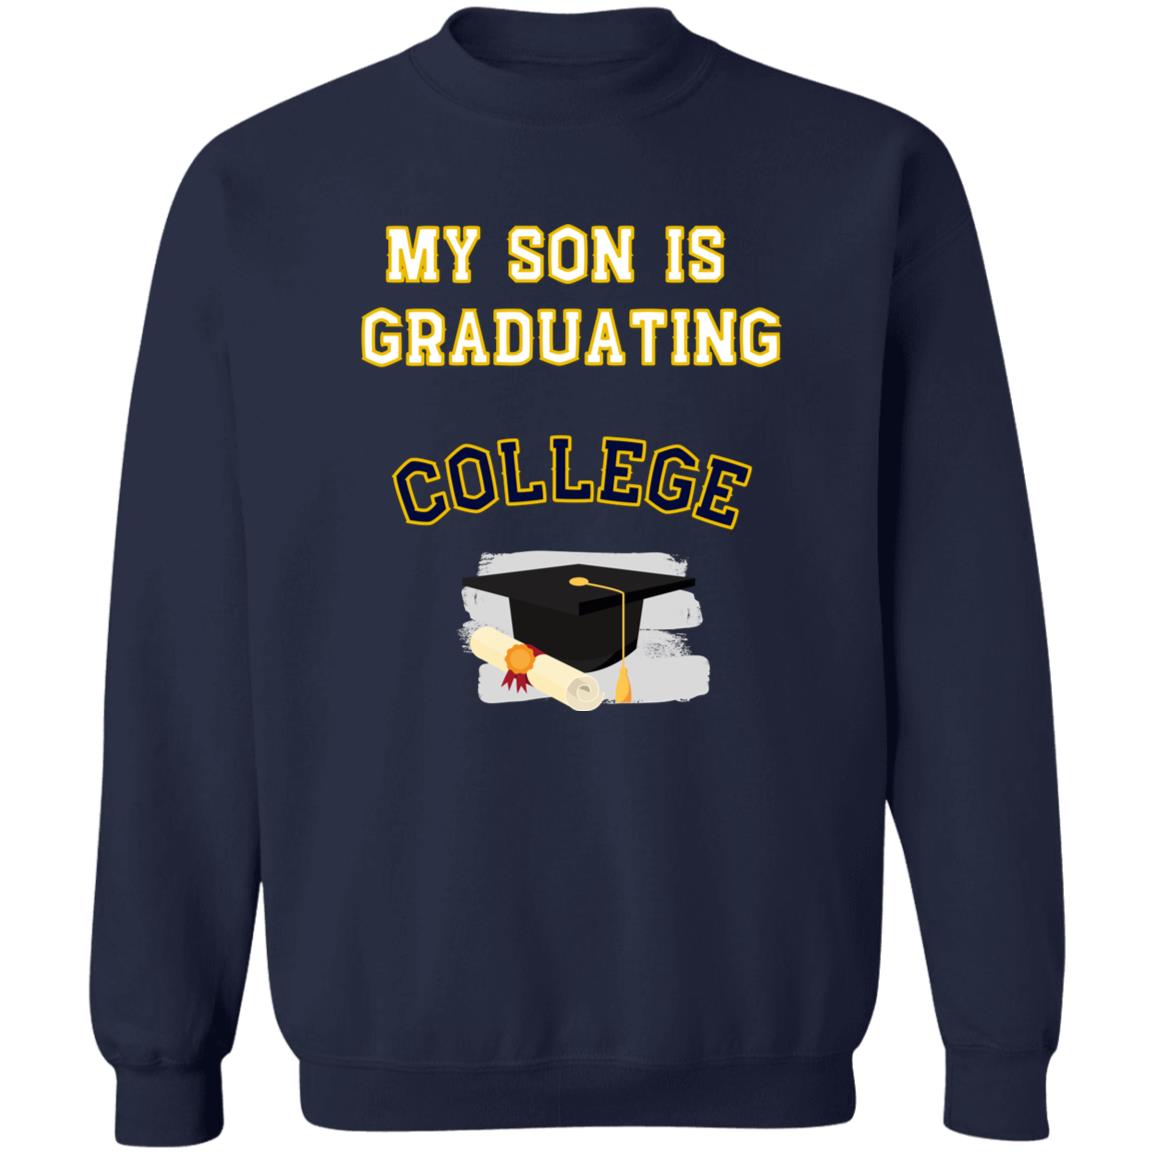 My son is graduating college sweatshirt